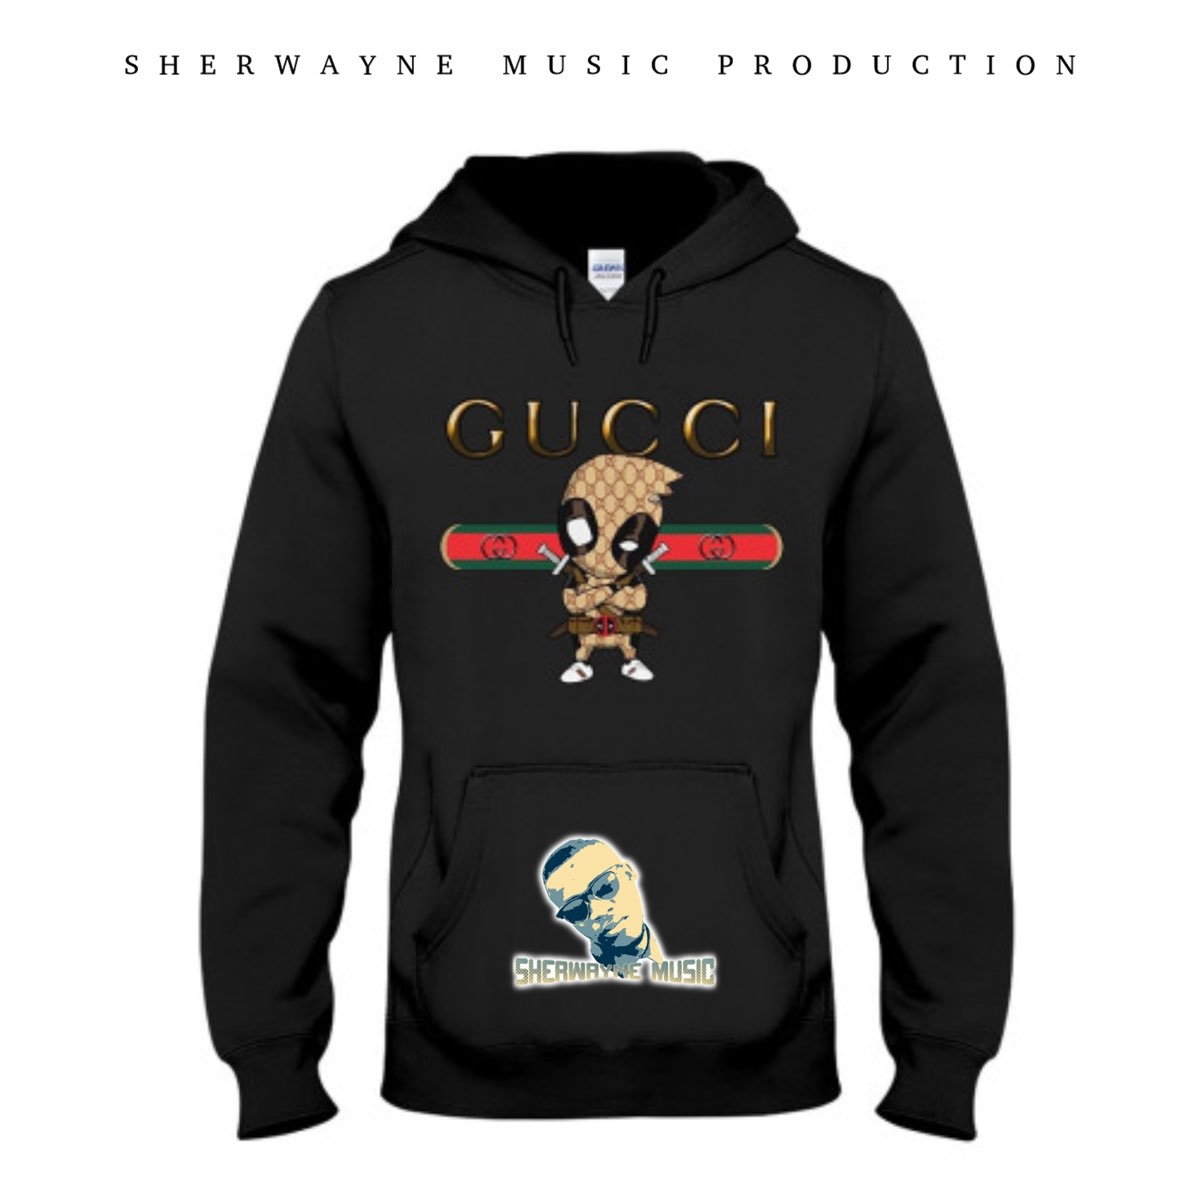 Gucci - Single - Album by Sherwayne Music Production - Music